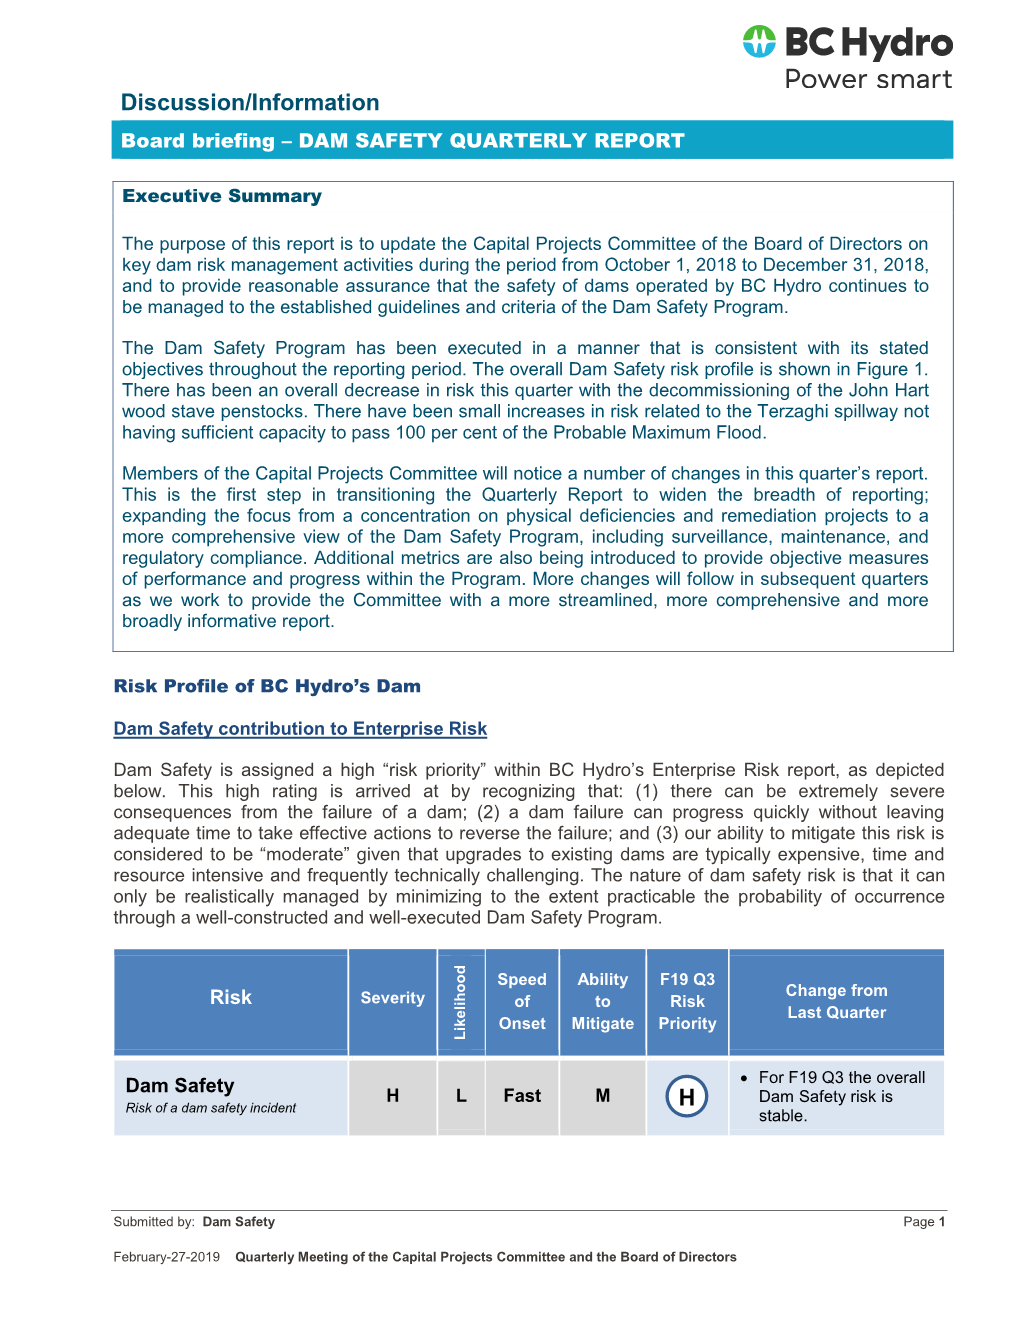 BC Hydro Dam Safety Quarterly Report